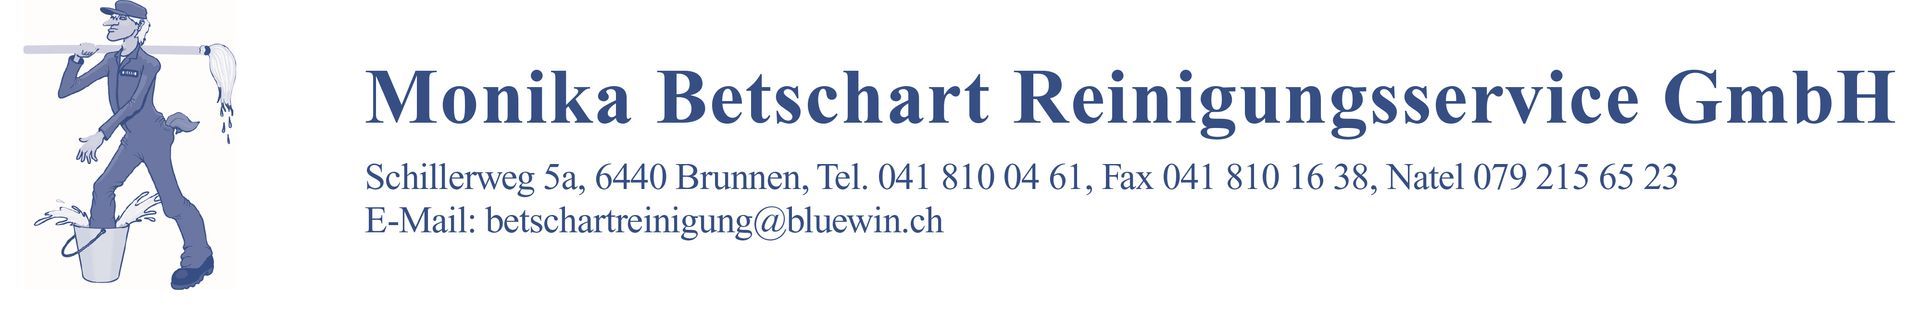 Monika Betschart Reinigungsservice GmbH